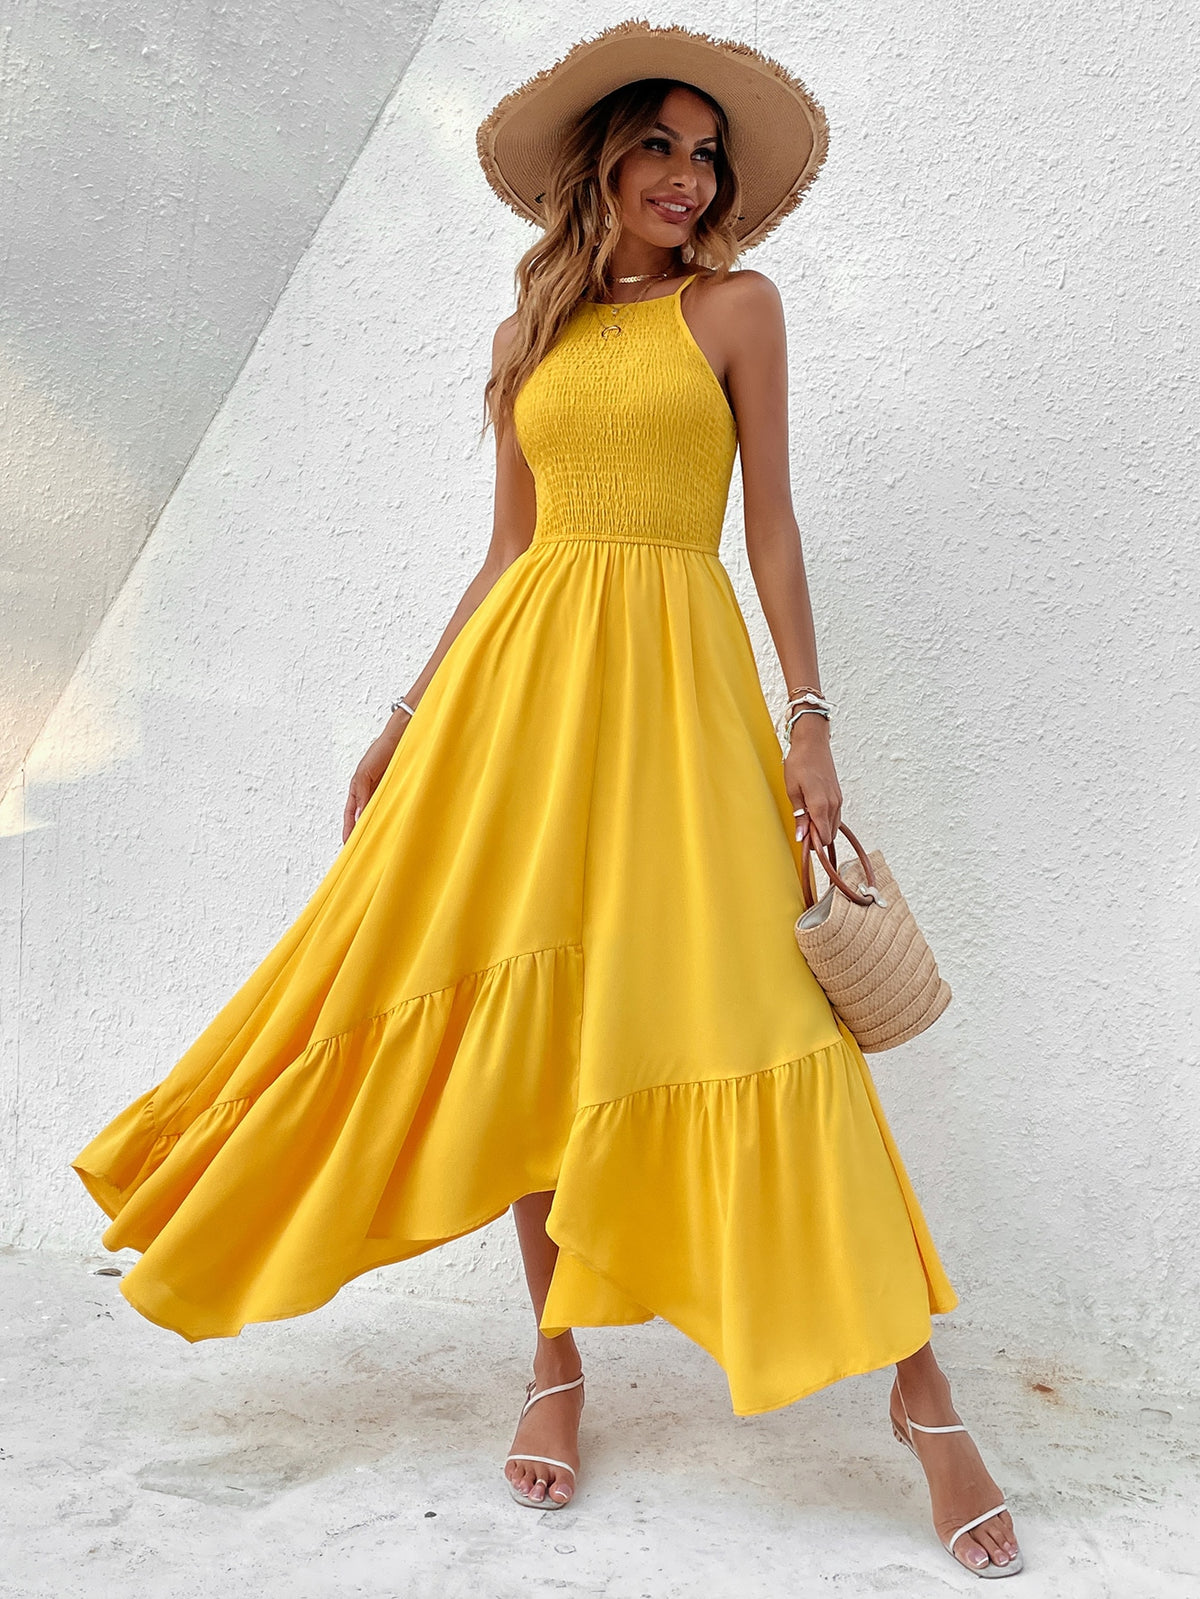 Shirred Cami Dress with Hanky Hem - Yellow / XL